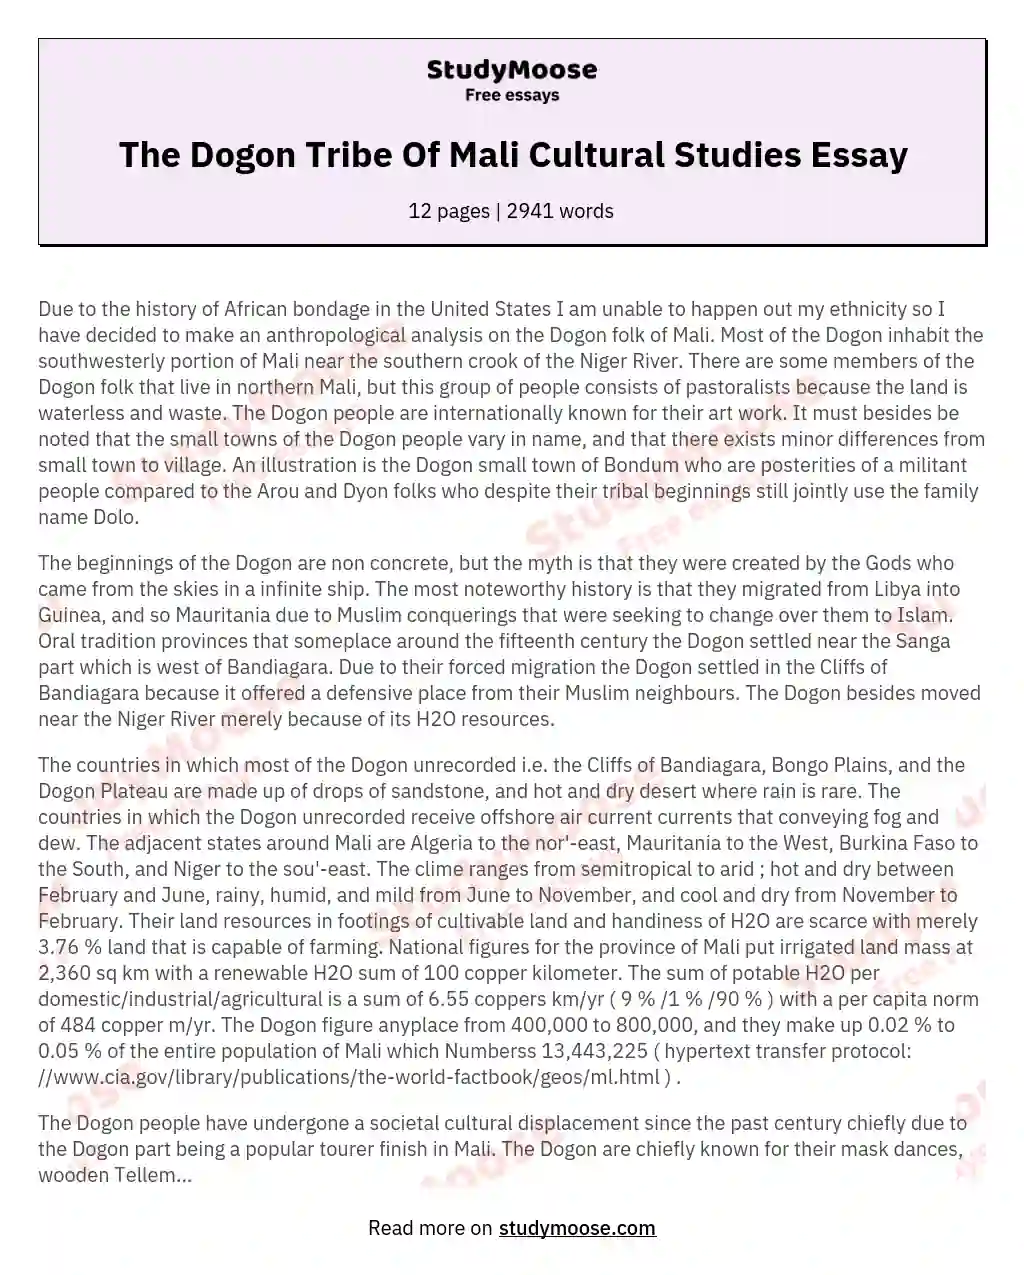 The Dogon Tribe Of Mali Cultural Studies Essay essay